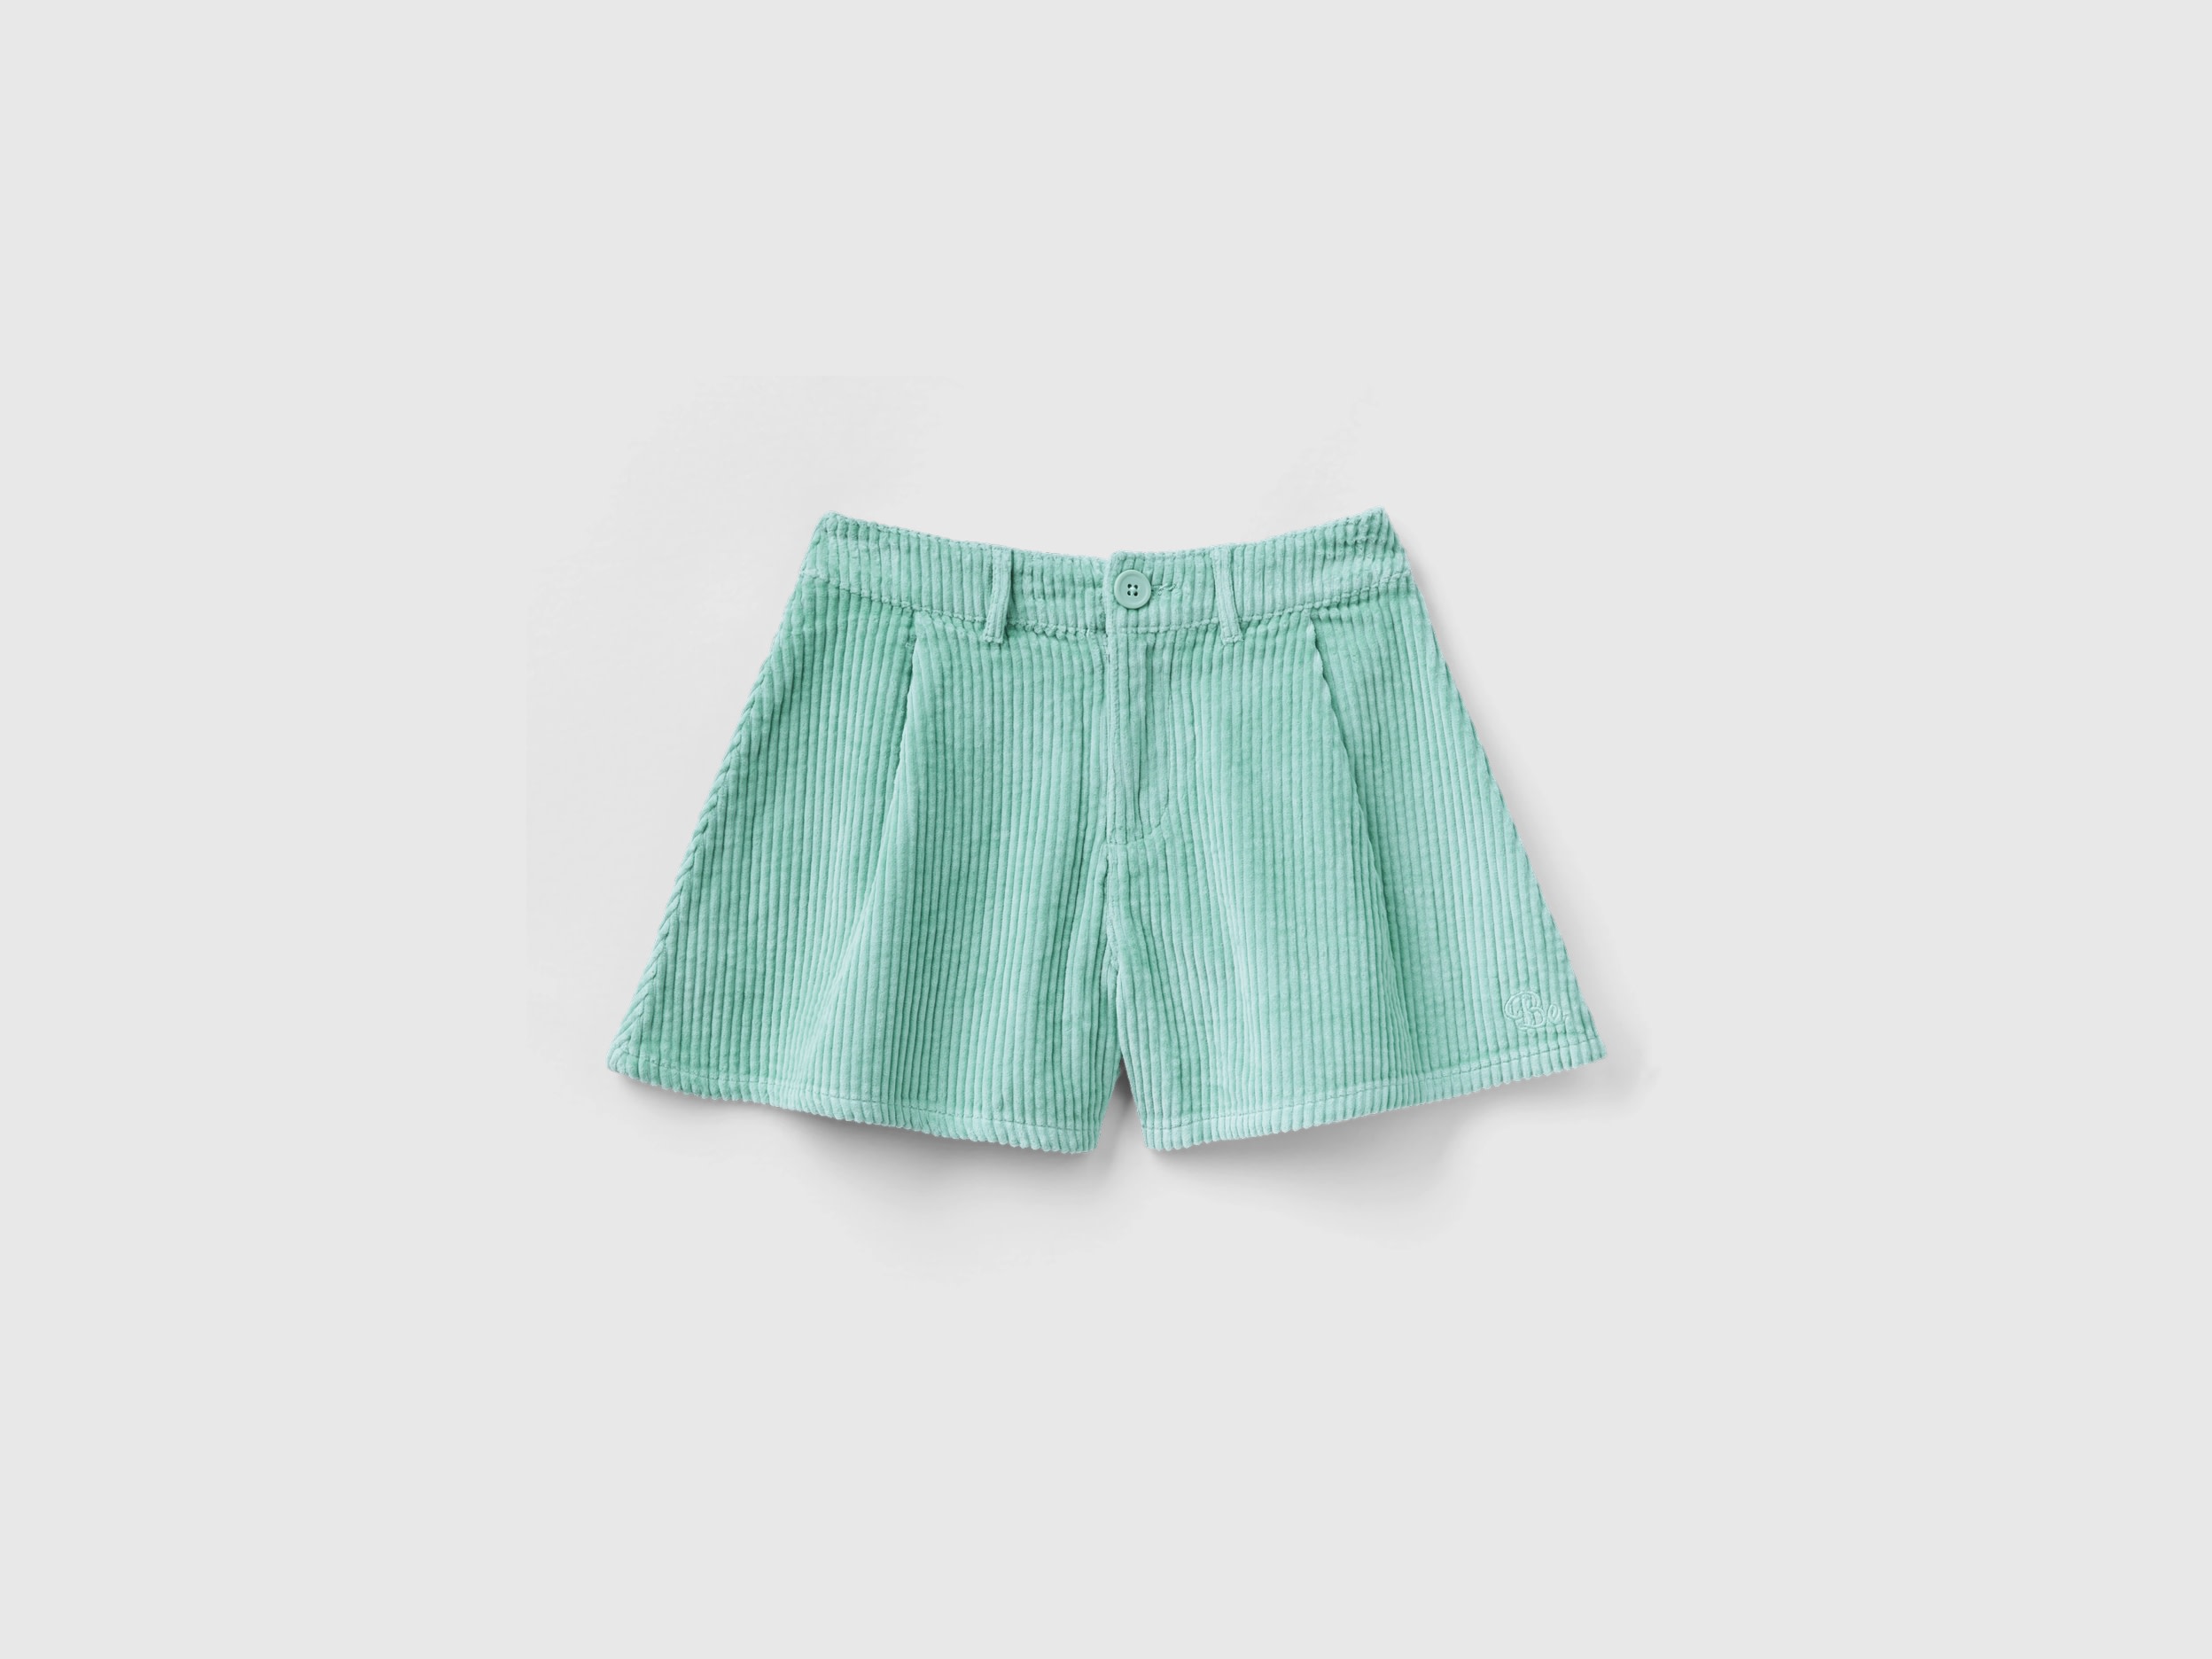 Benetton, Corduroy Bermuda Shorts, size L, Aqua, Kids